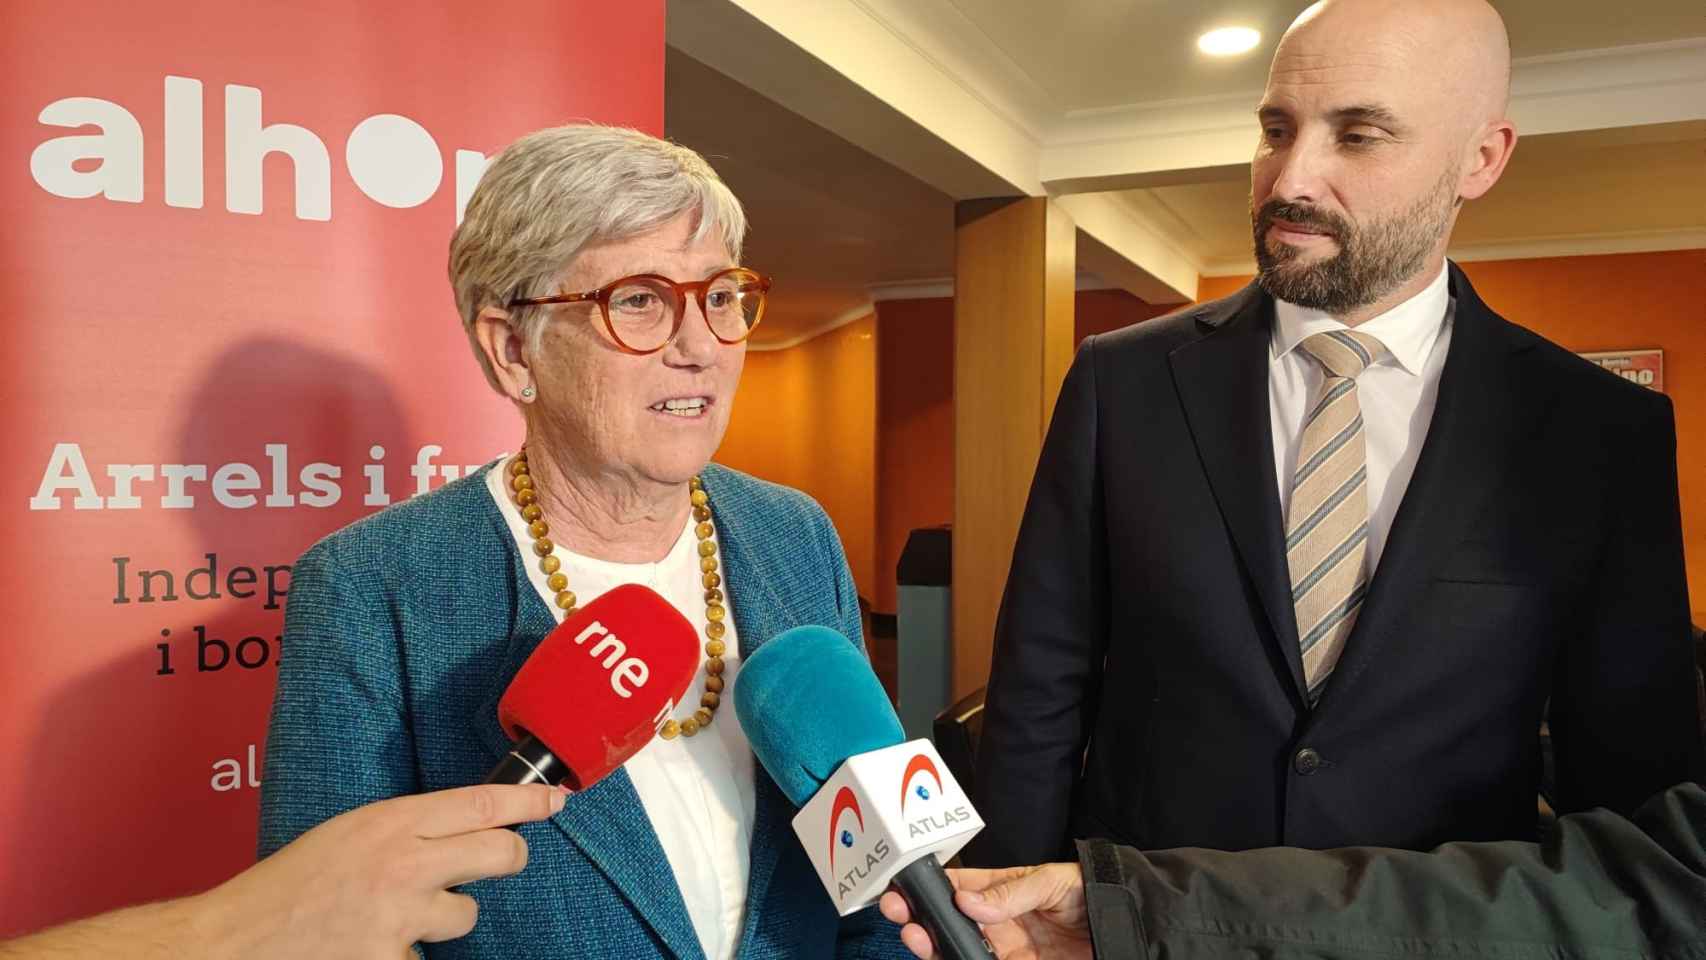 Jordi Graupera, candidato de Alhora a la presidencia de la Generalitat de Cataluña